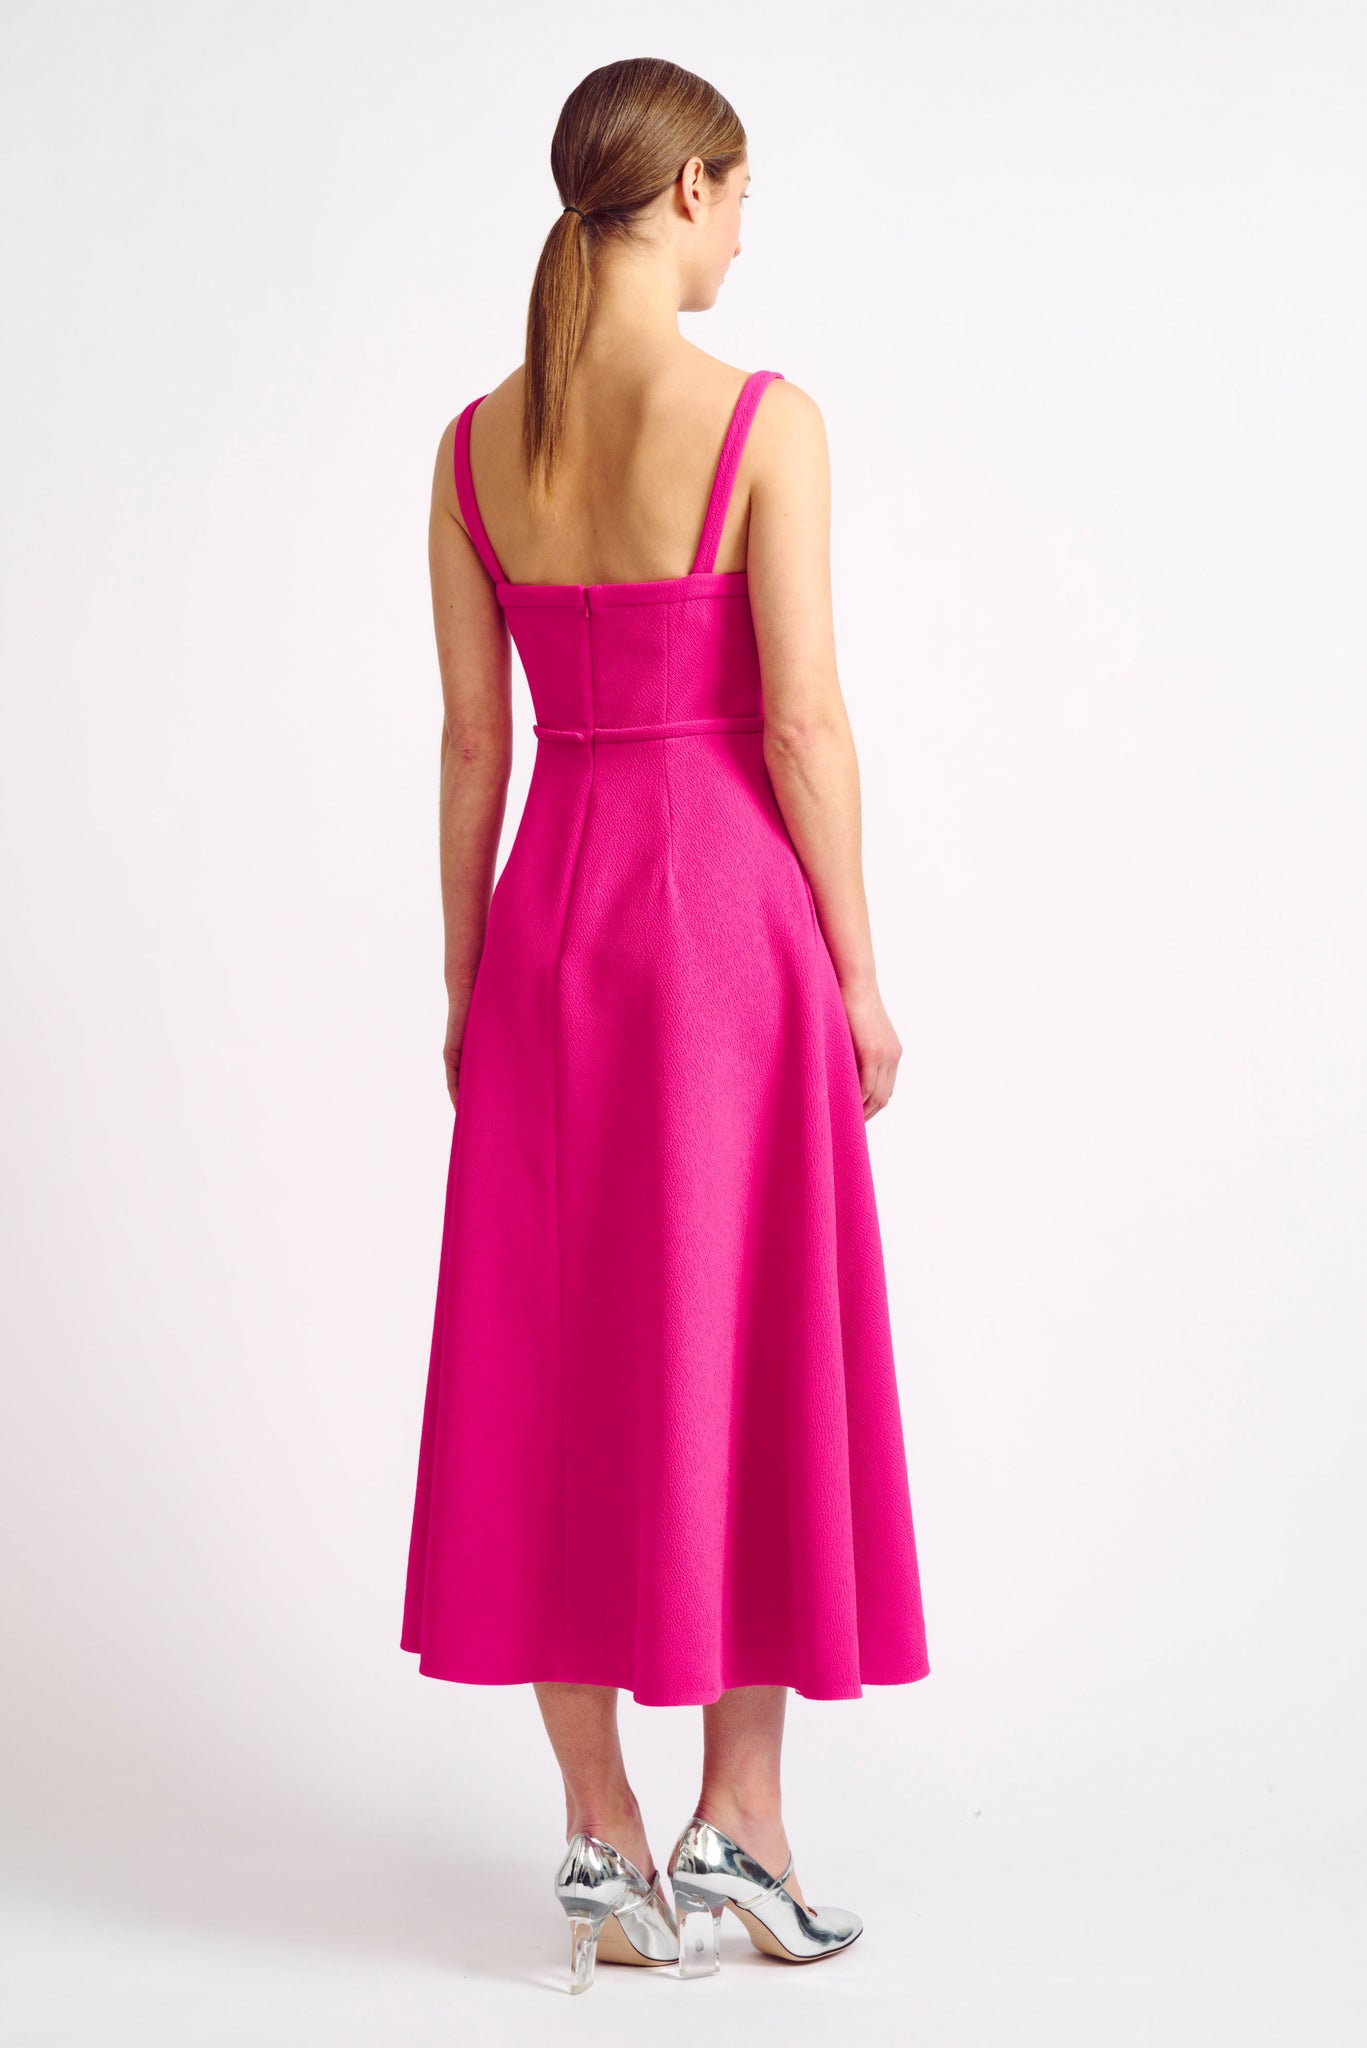 Elvita Hot Pink Double Crepe Dress